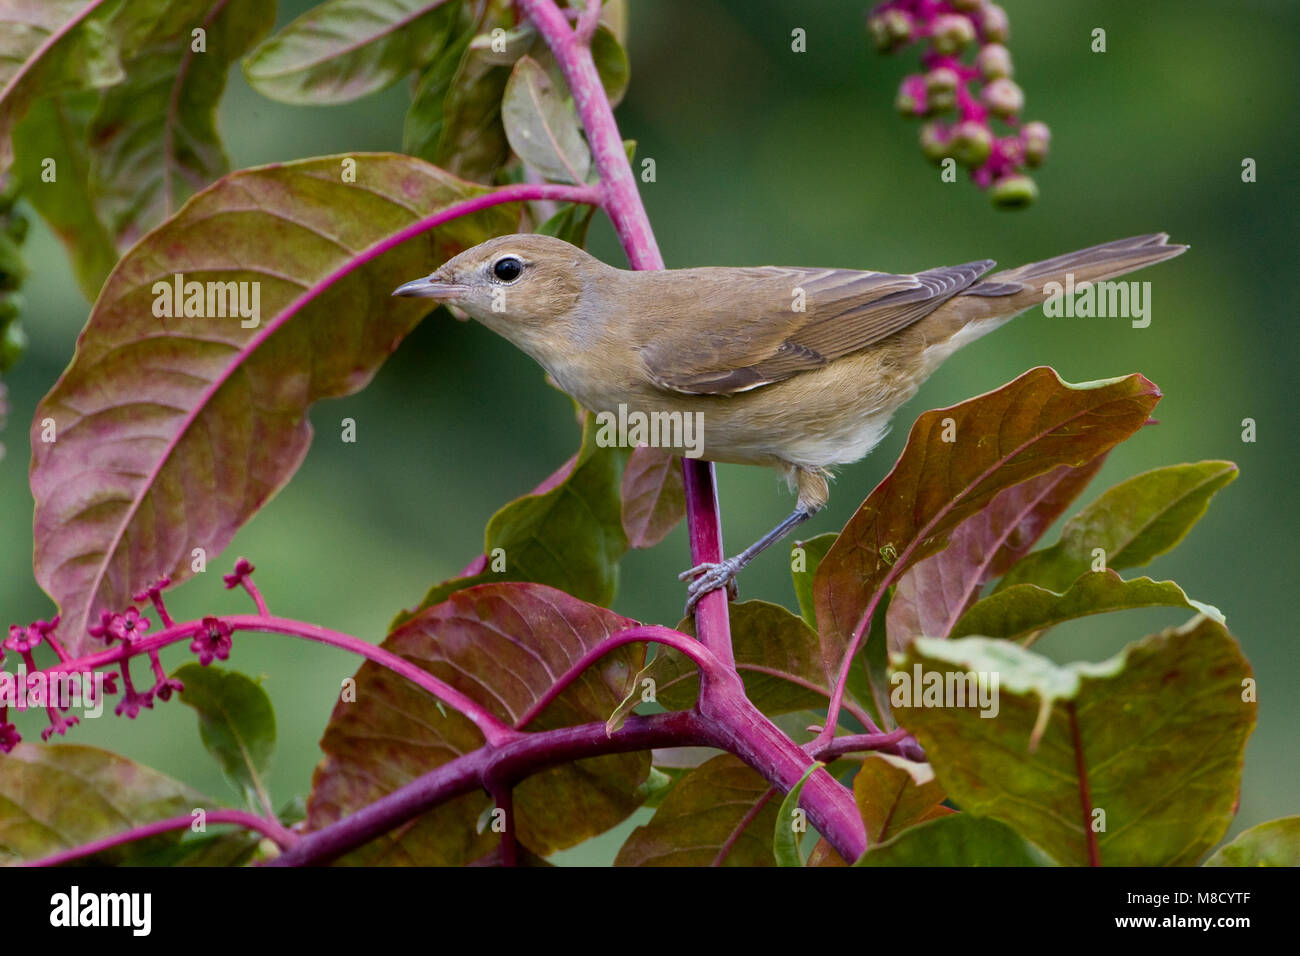 Tuinfluiter zittend; Garden Warbler perched Stock Photo